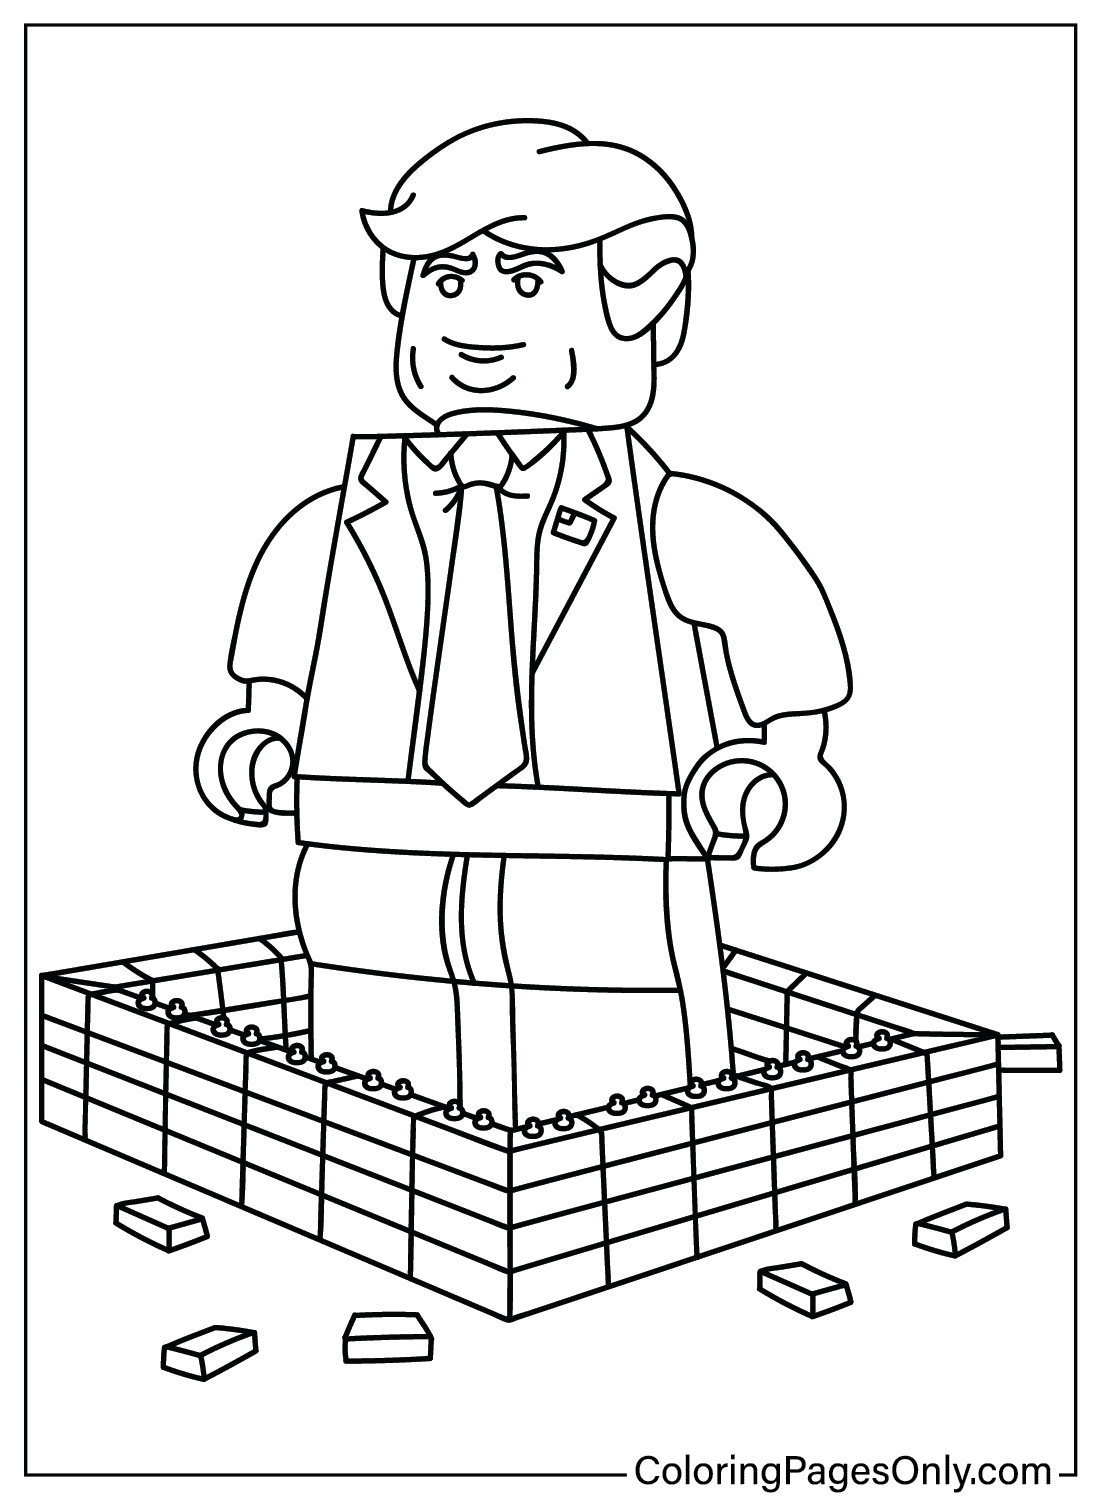 Lego Donald Trump Página para colorear imprimible de Donald Trump